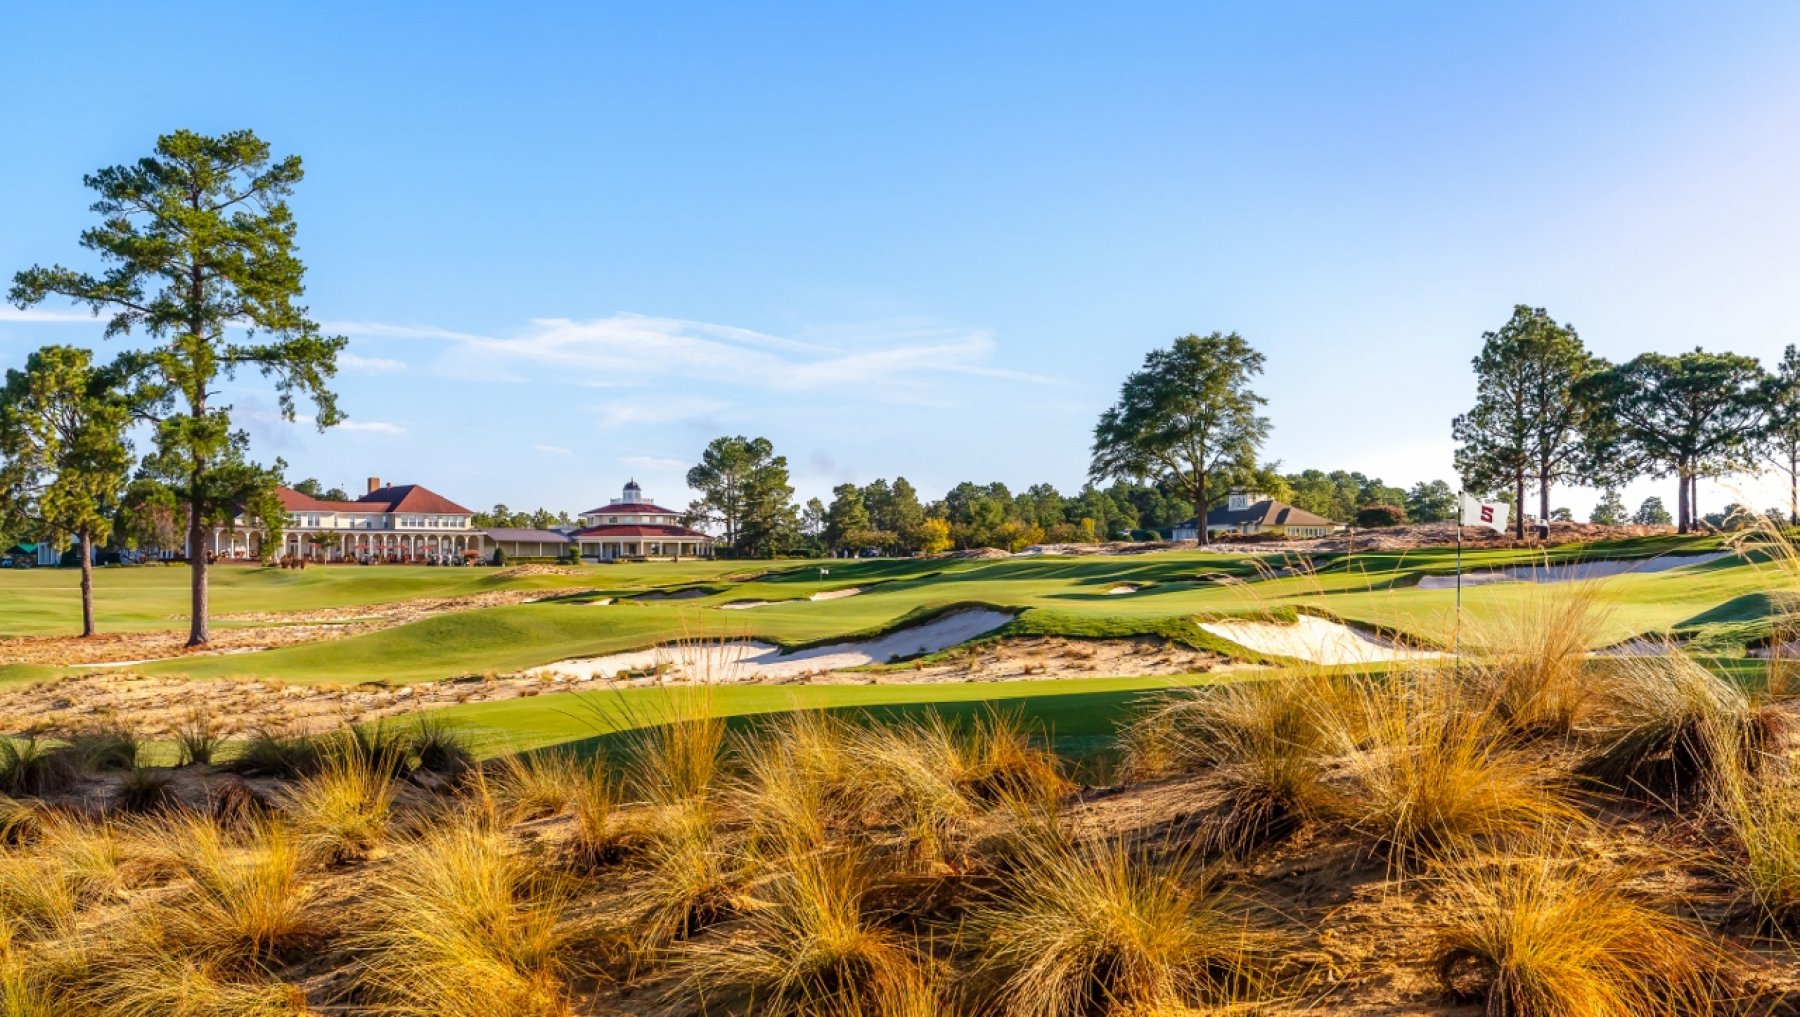 The Cradle Golf Course at Pinehurst Resort